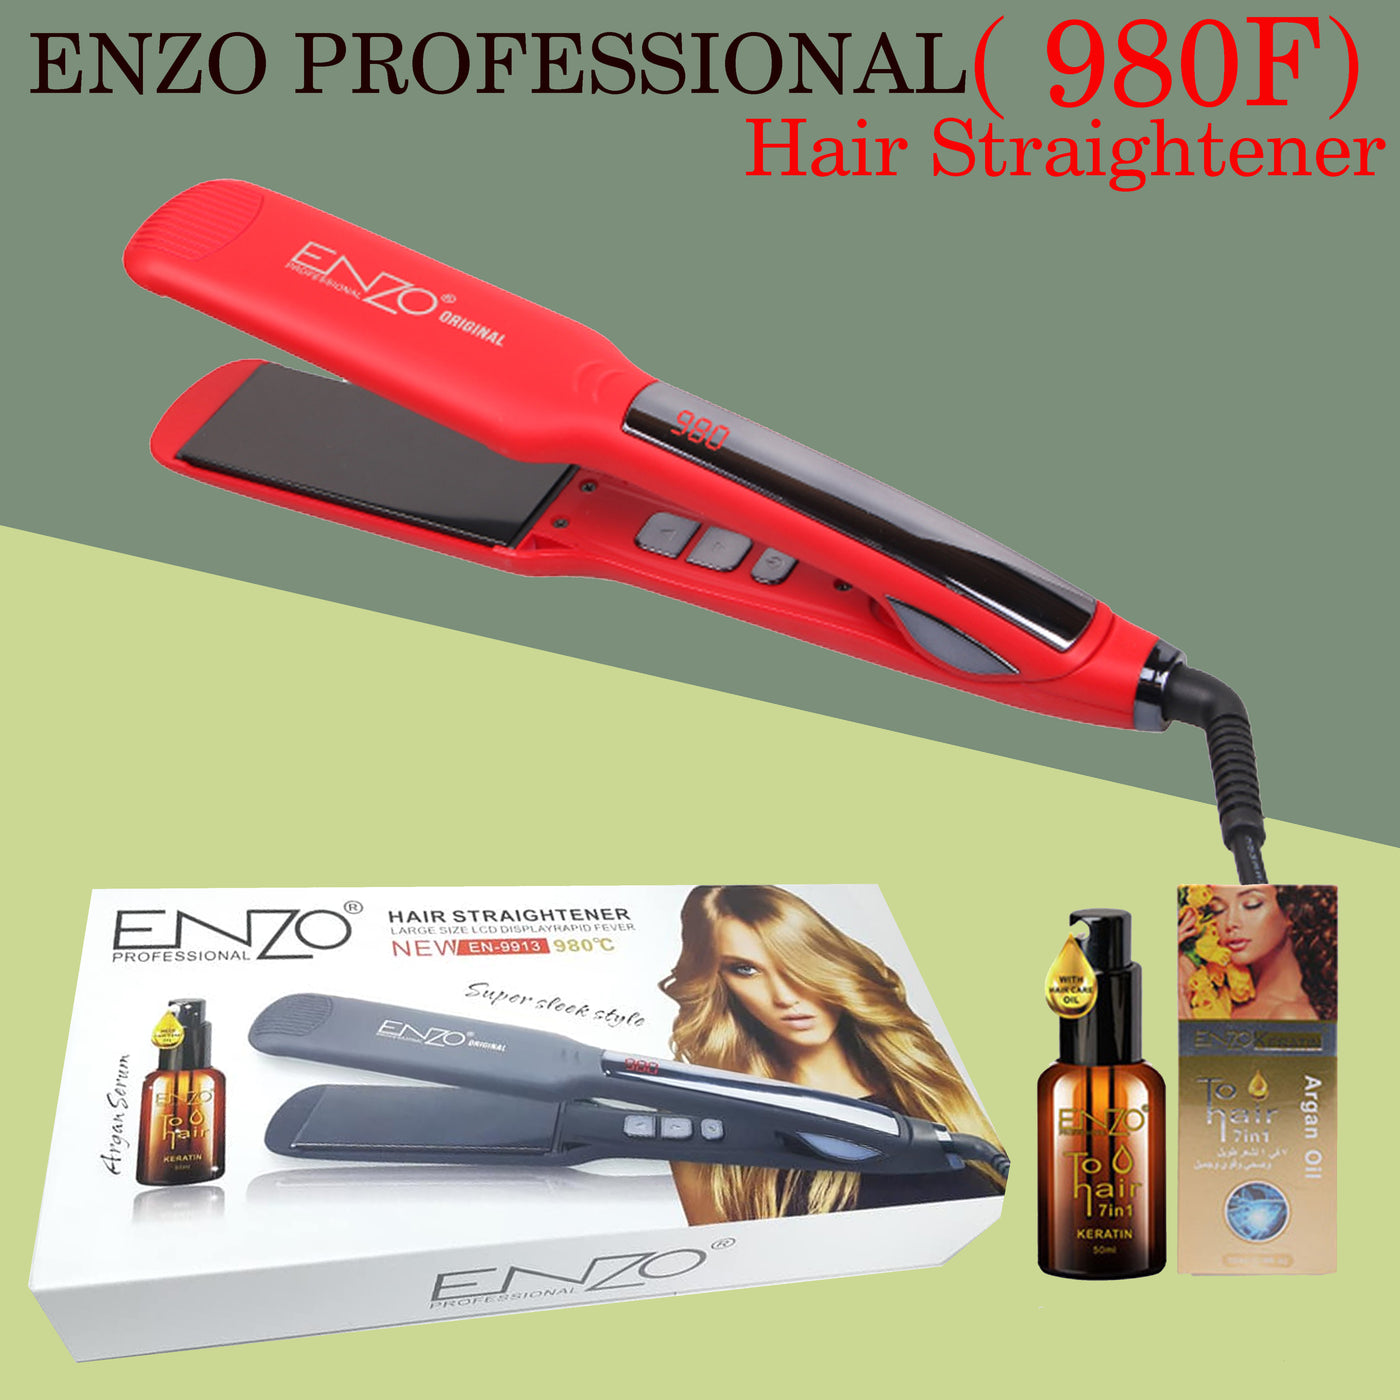 Enzo Professional Hair Straightener (980F )